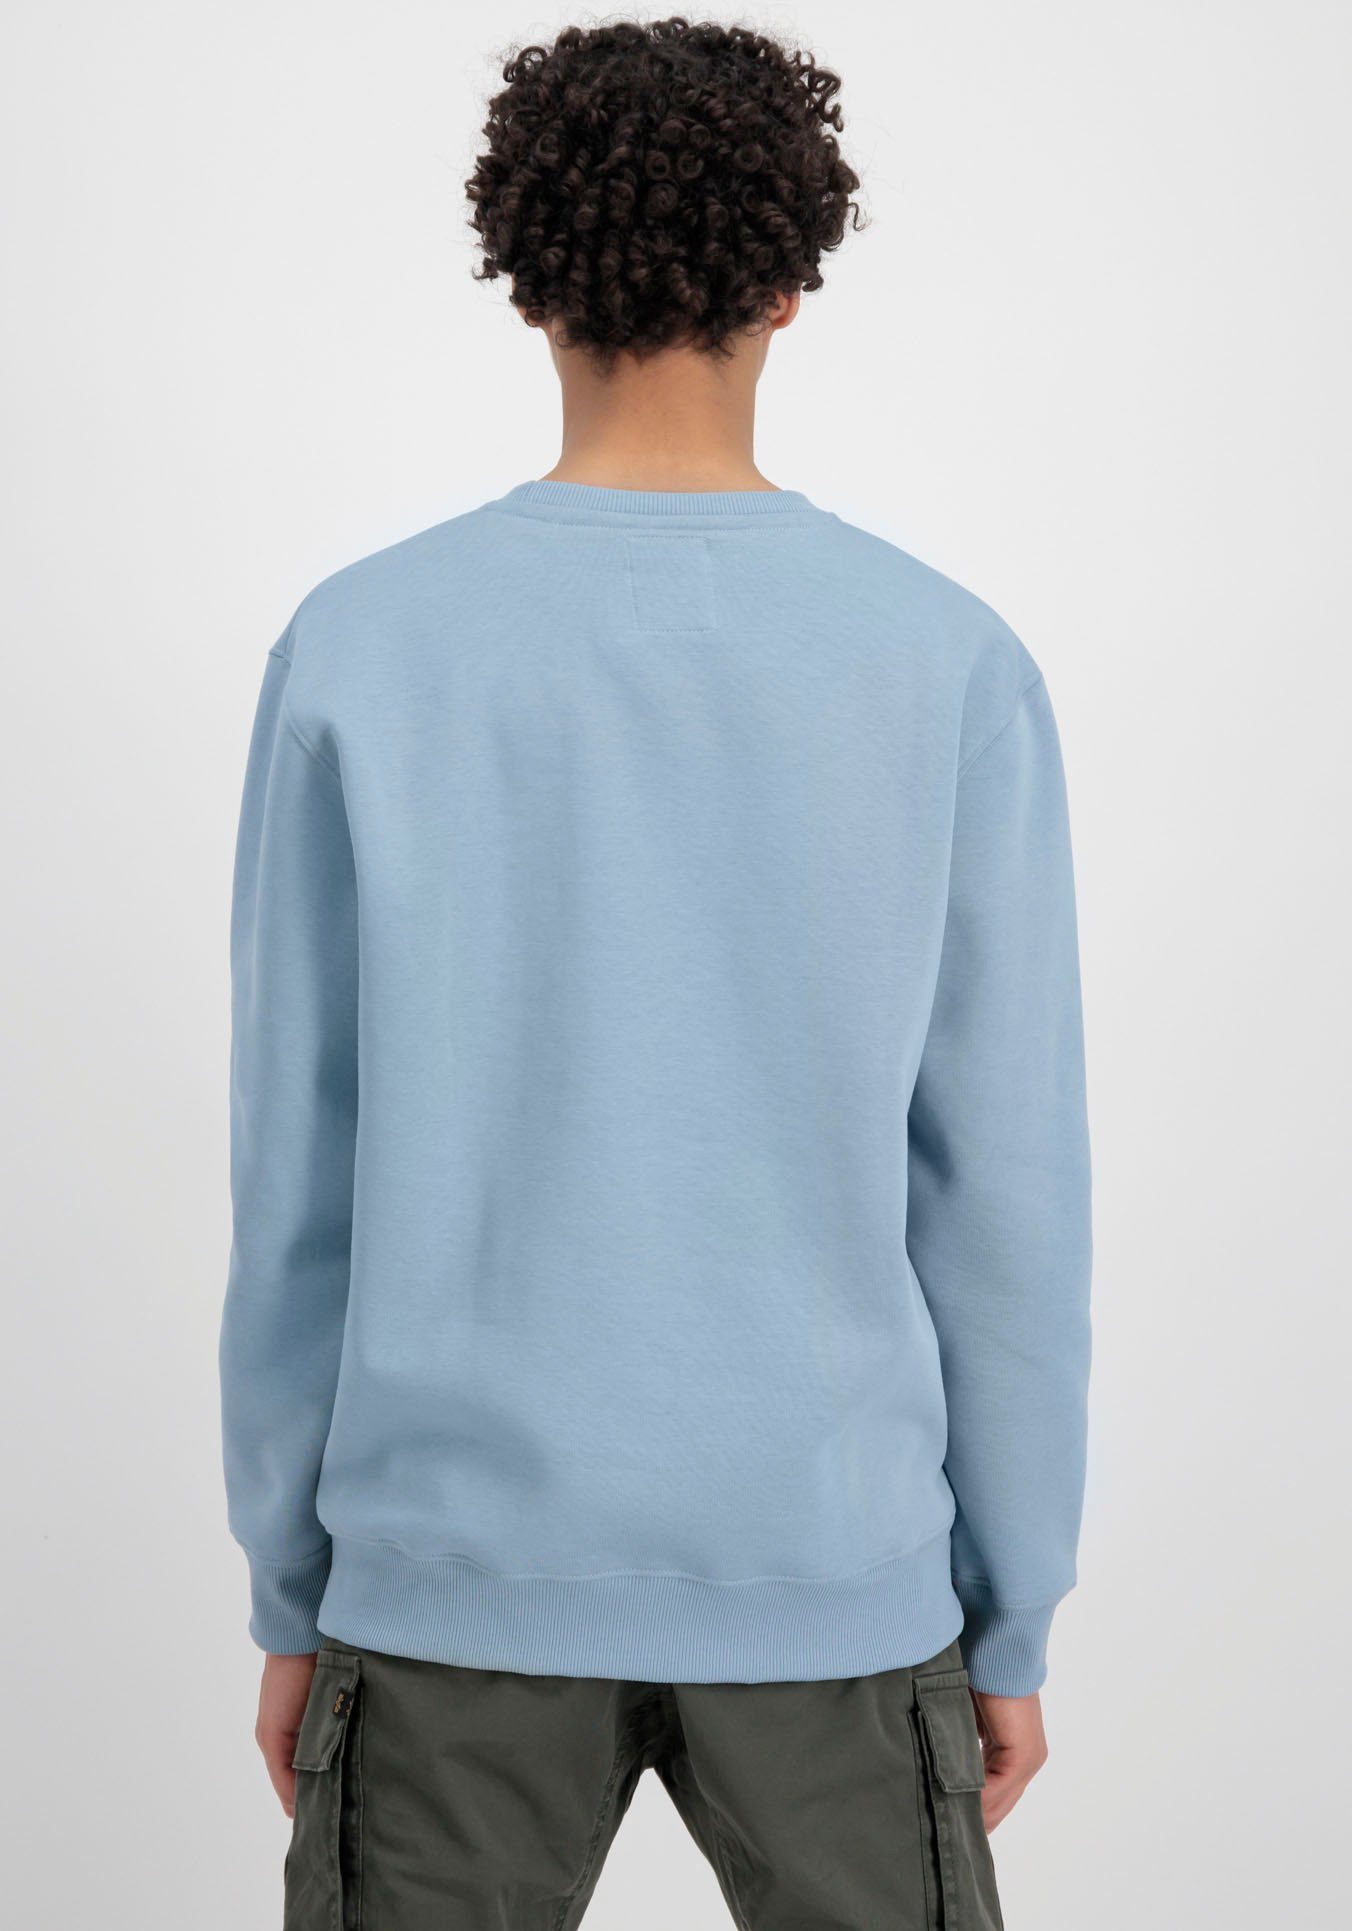 Basic Alpha Sweatshirt Sweater greyblue Industries